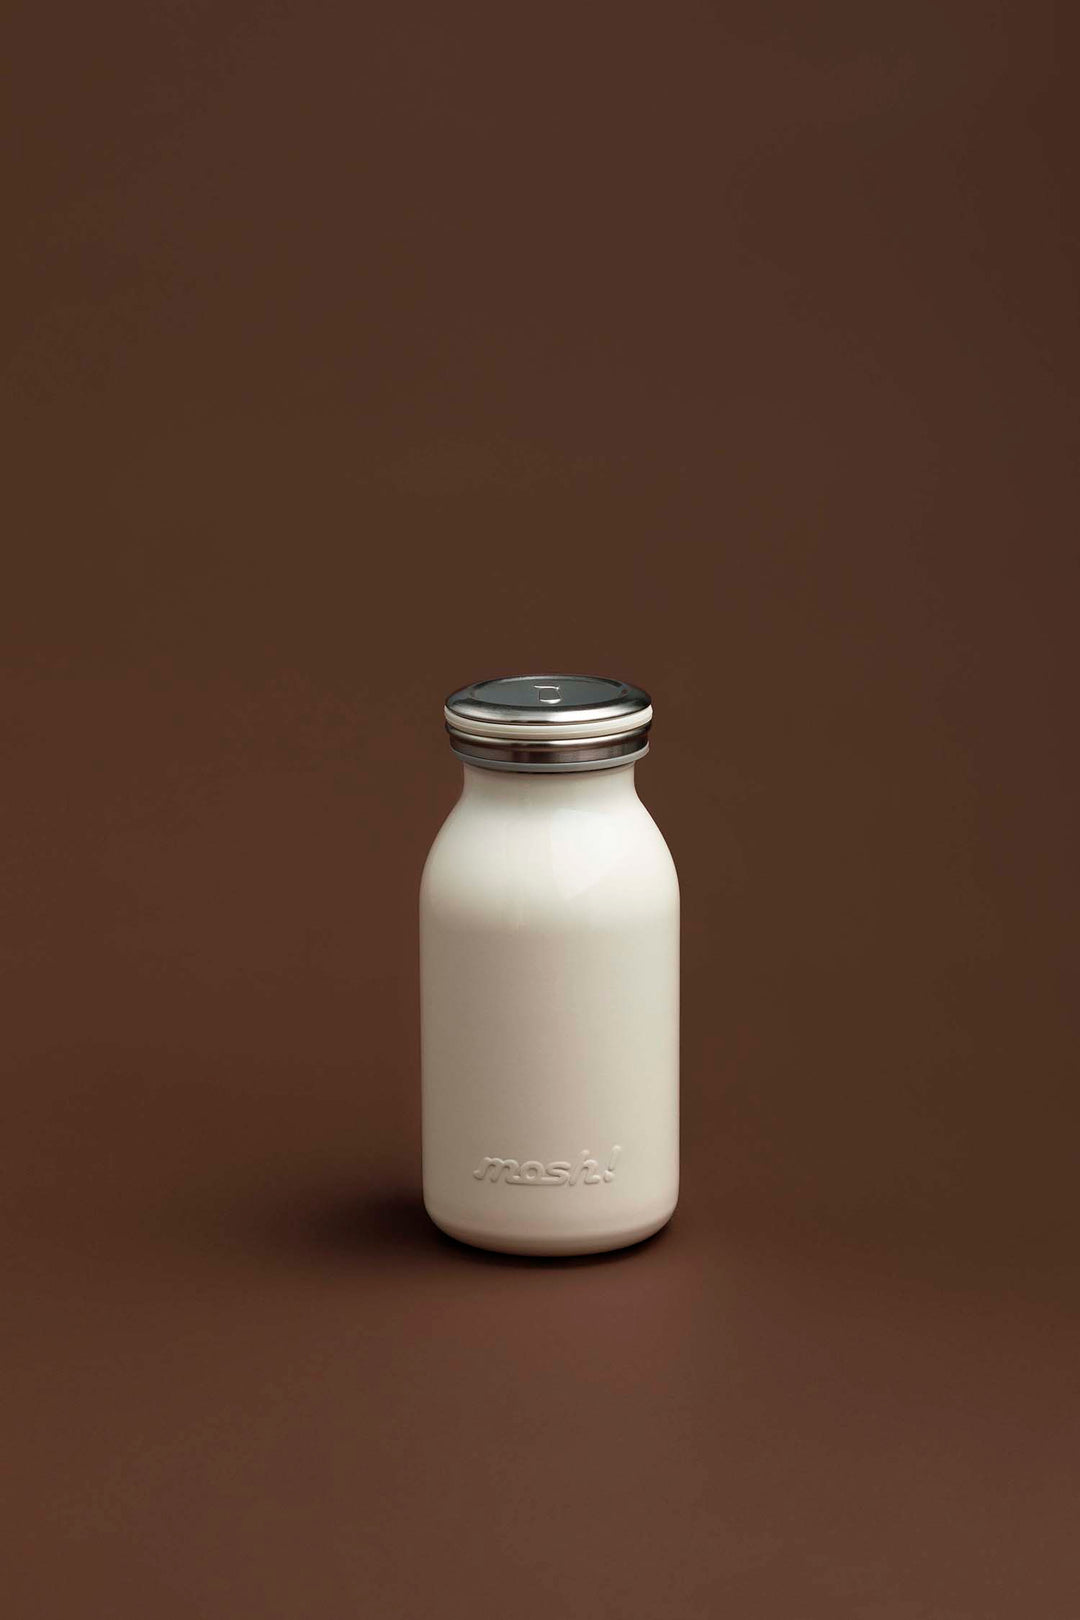 Mosh! Milk Bottle 380ml - Ivory DS-DMNMB380IV